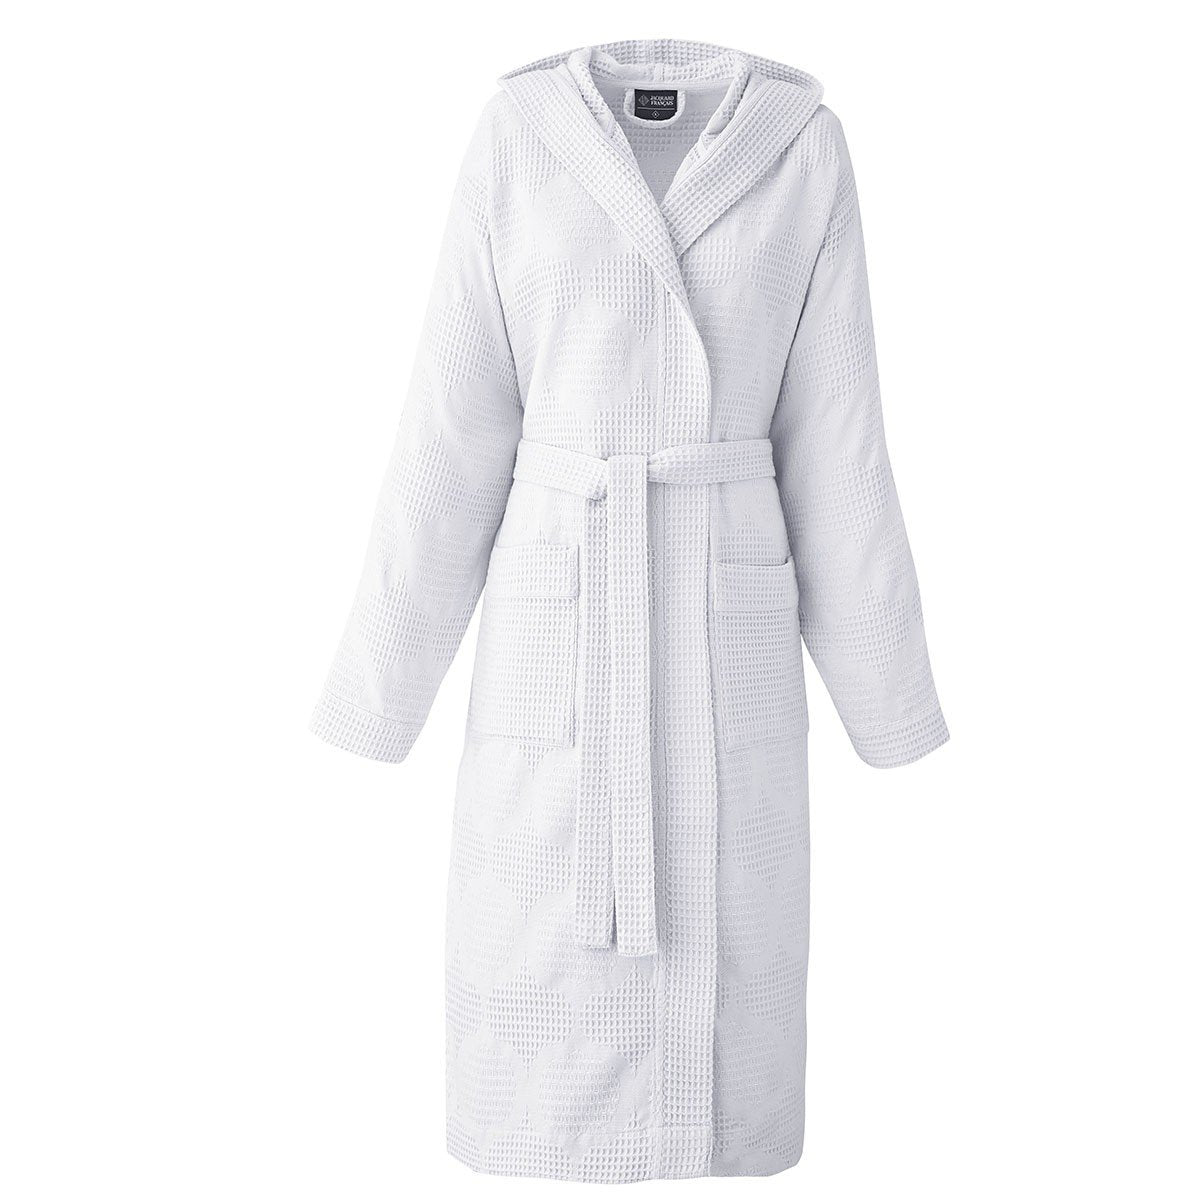 Hera White Bathrobe by Le Jacquard Français | Fig Linens - Hooded bath robe, pockets, belt